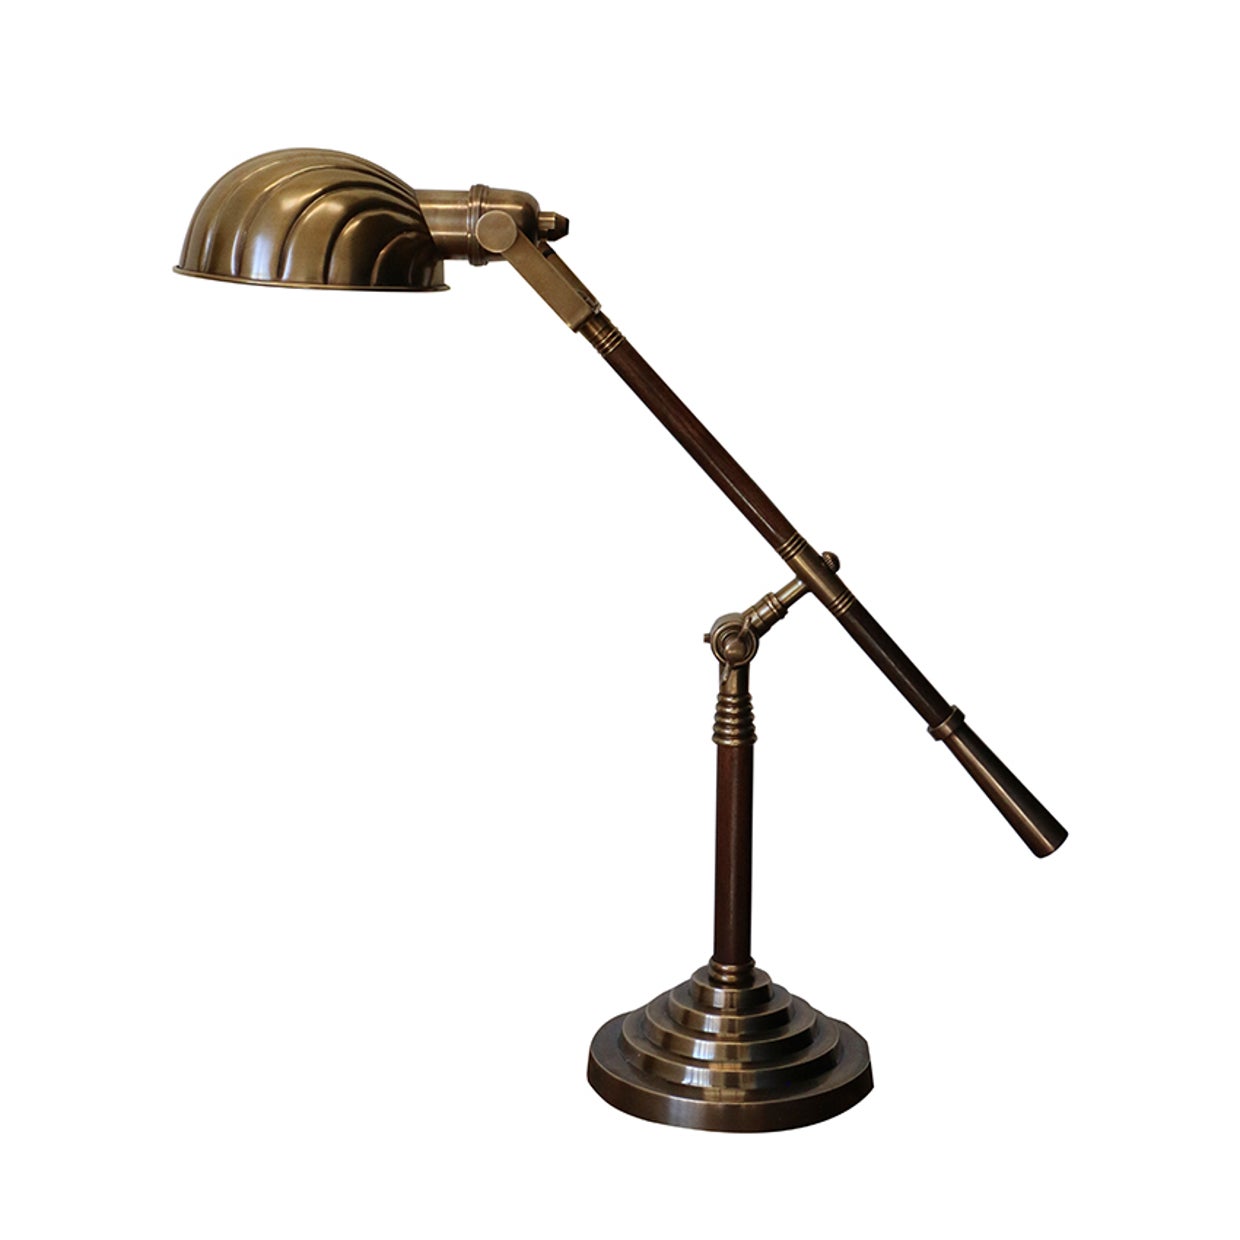 BRASS ANTIQUED FINISH & WOOD ADJUSTABLE CLAM DESK LAMP